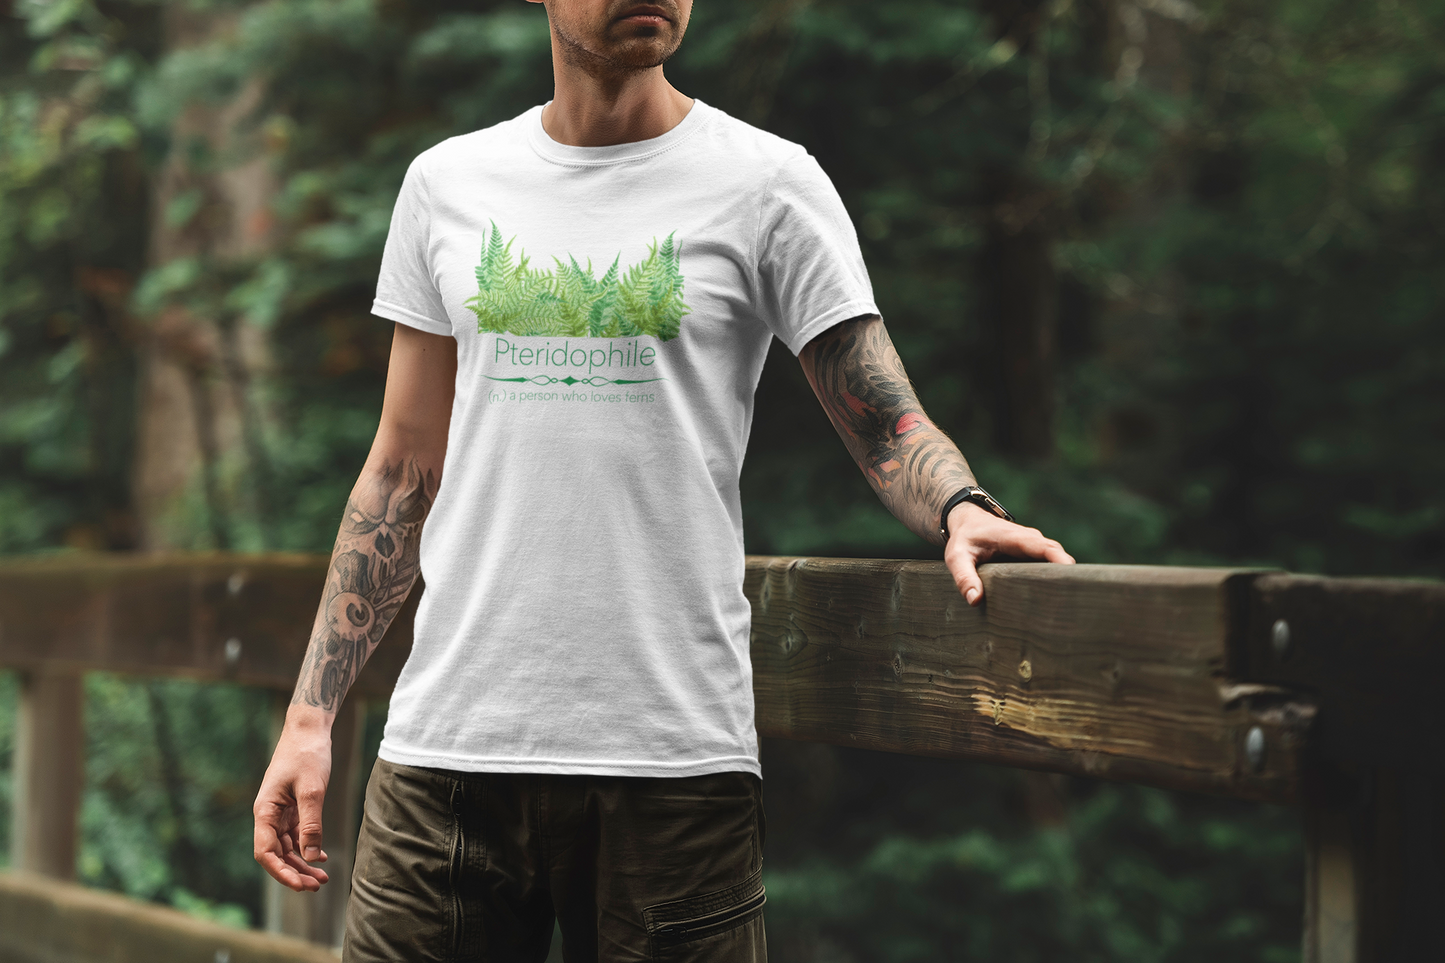 Pteridophile - fern lover T-shirt